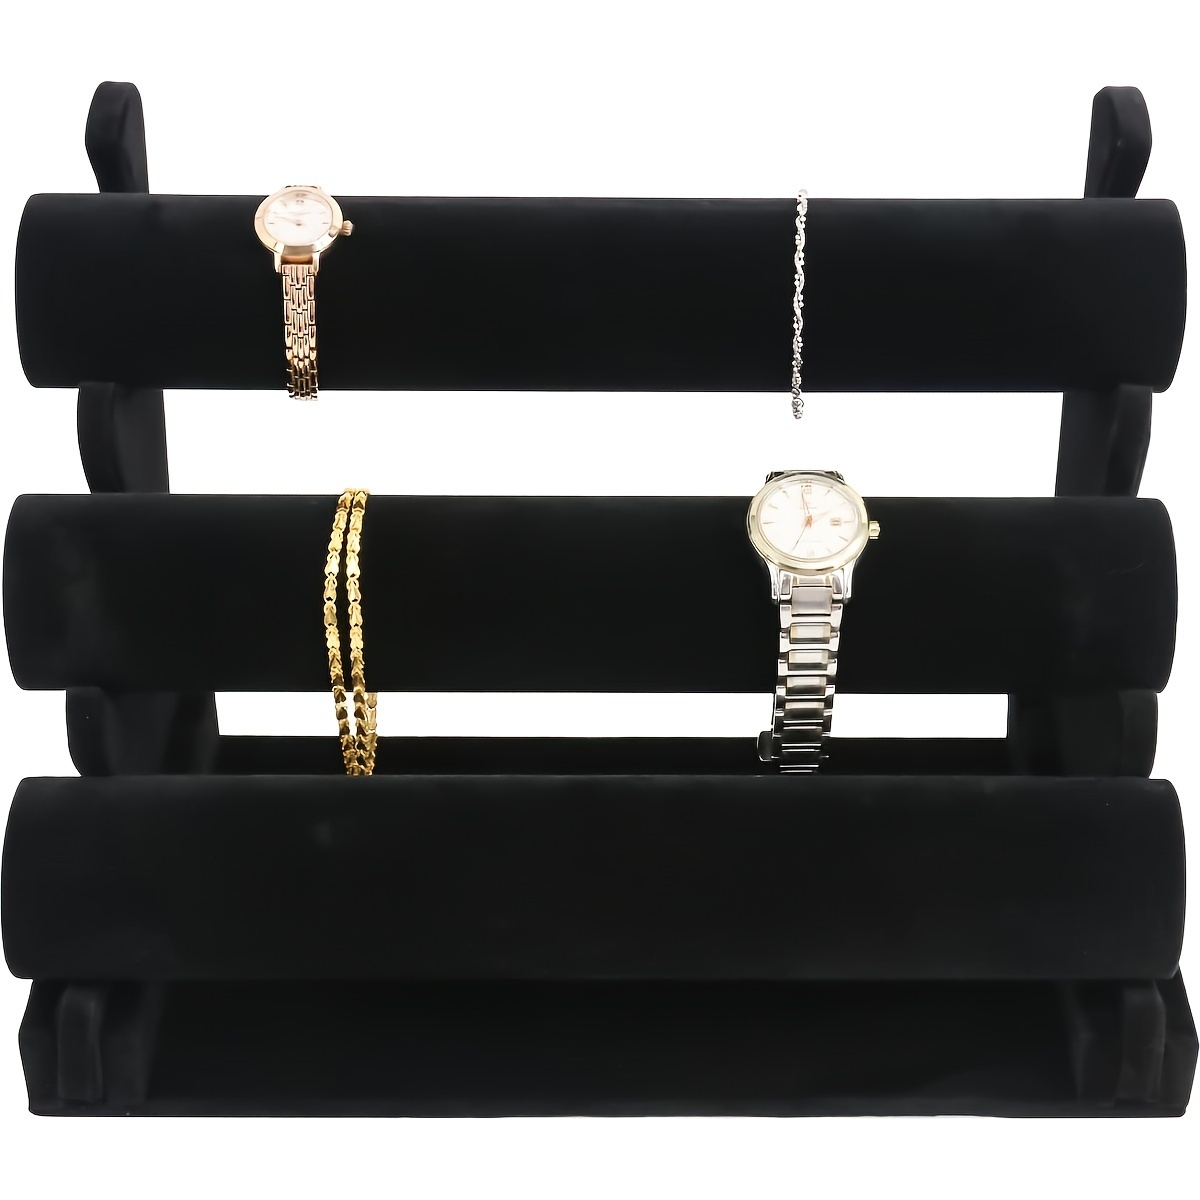 

1 Pc 3-tier Black Velvet Jewelry Bracelet Display Stand, Watch & Bangles Organizer Holder, Easy To Install, Elegant Storage Solution For Organization And Showcase